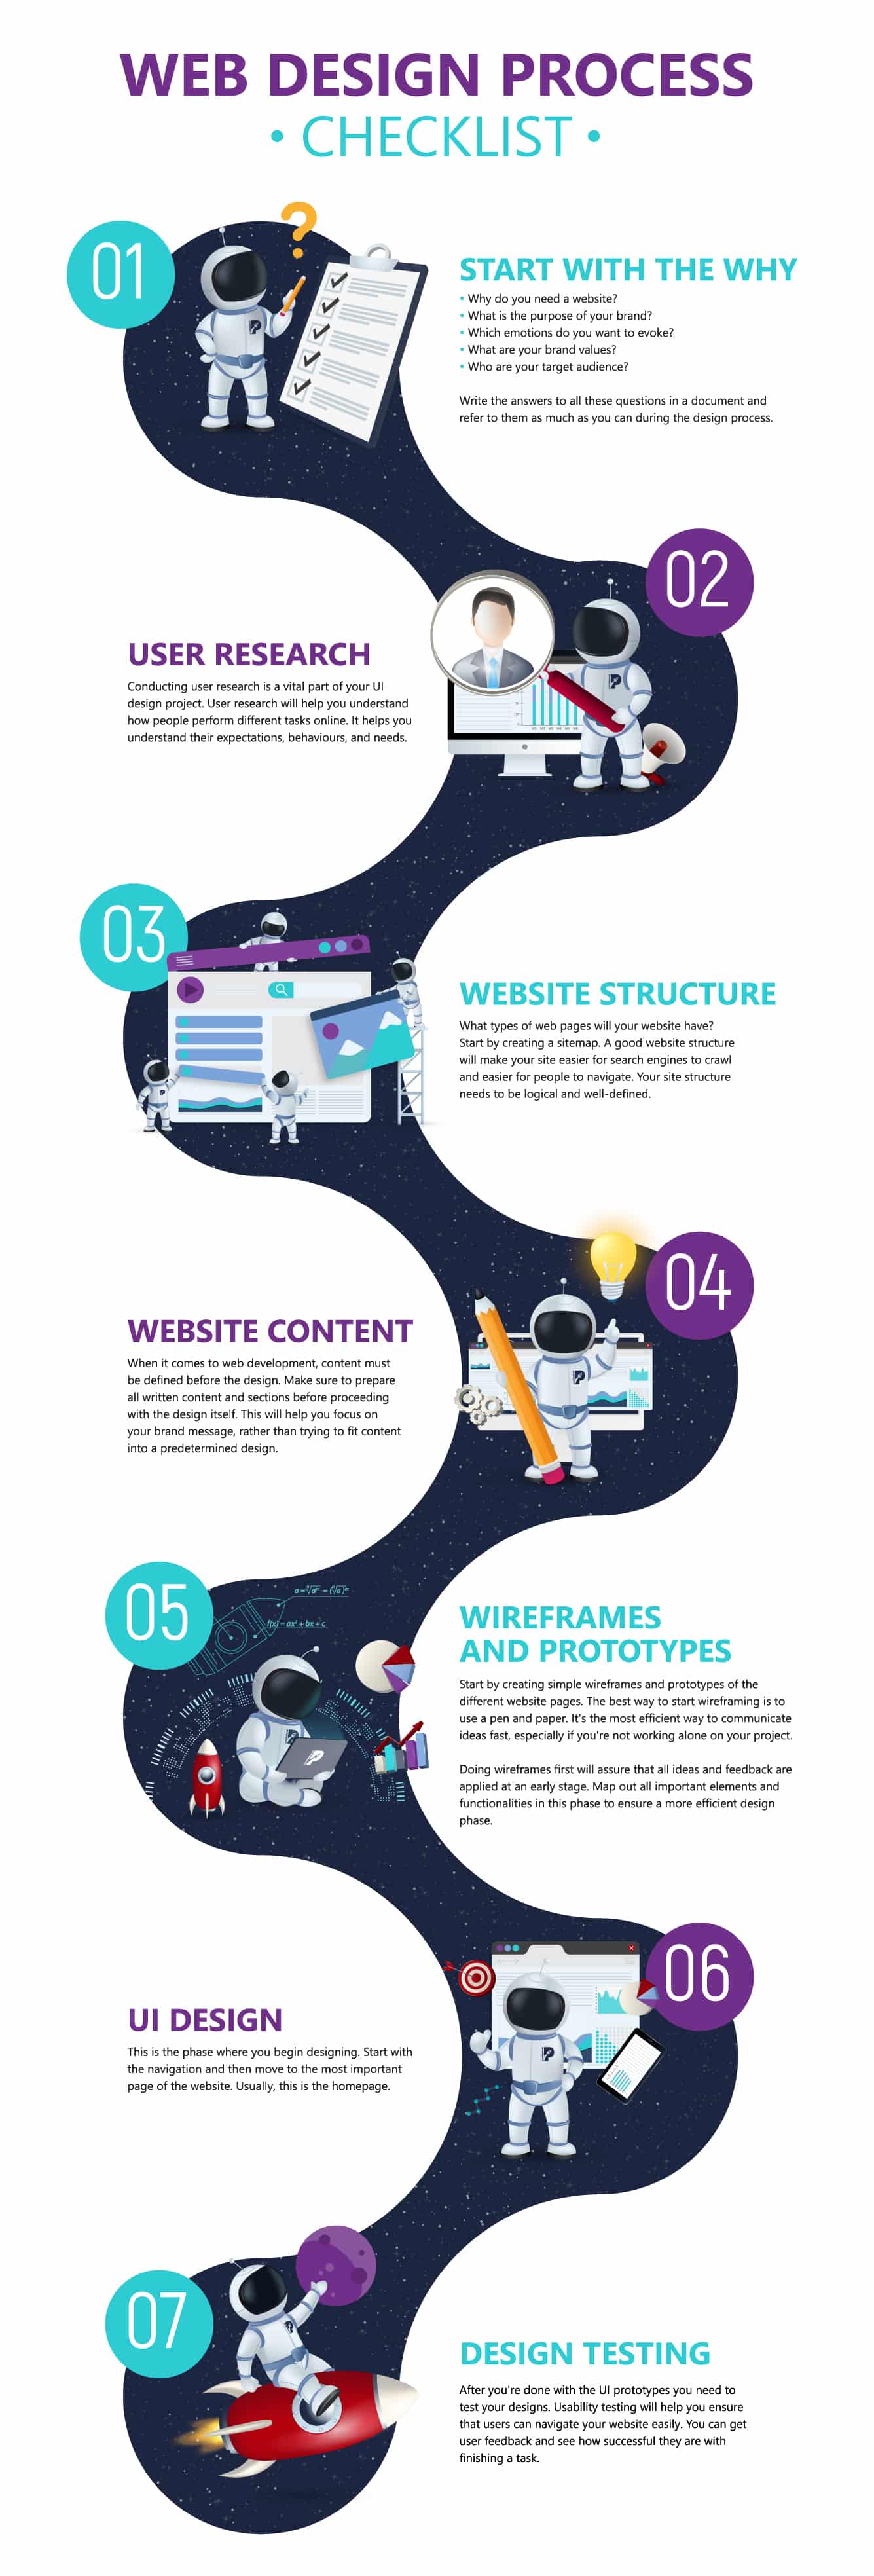 Web Design Process Checklist + Infographic blog